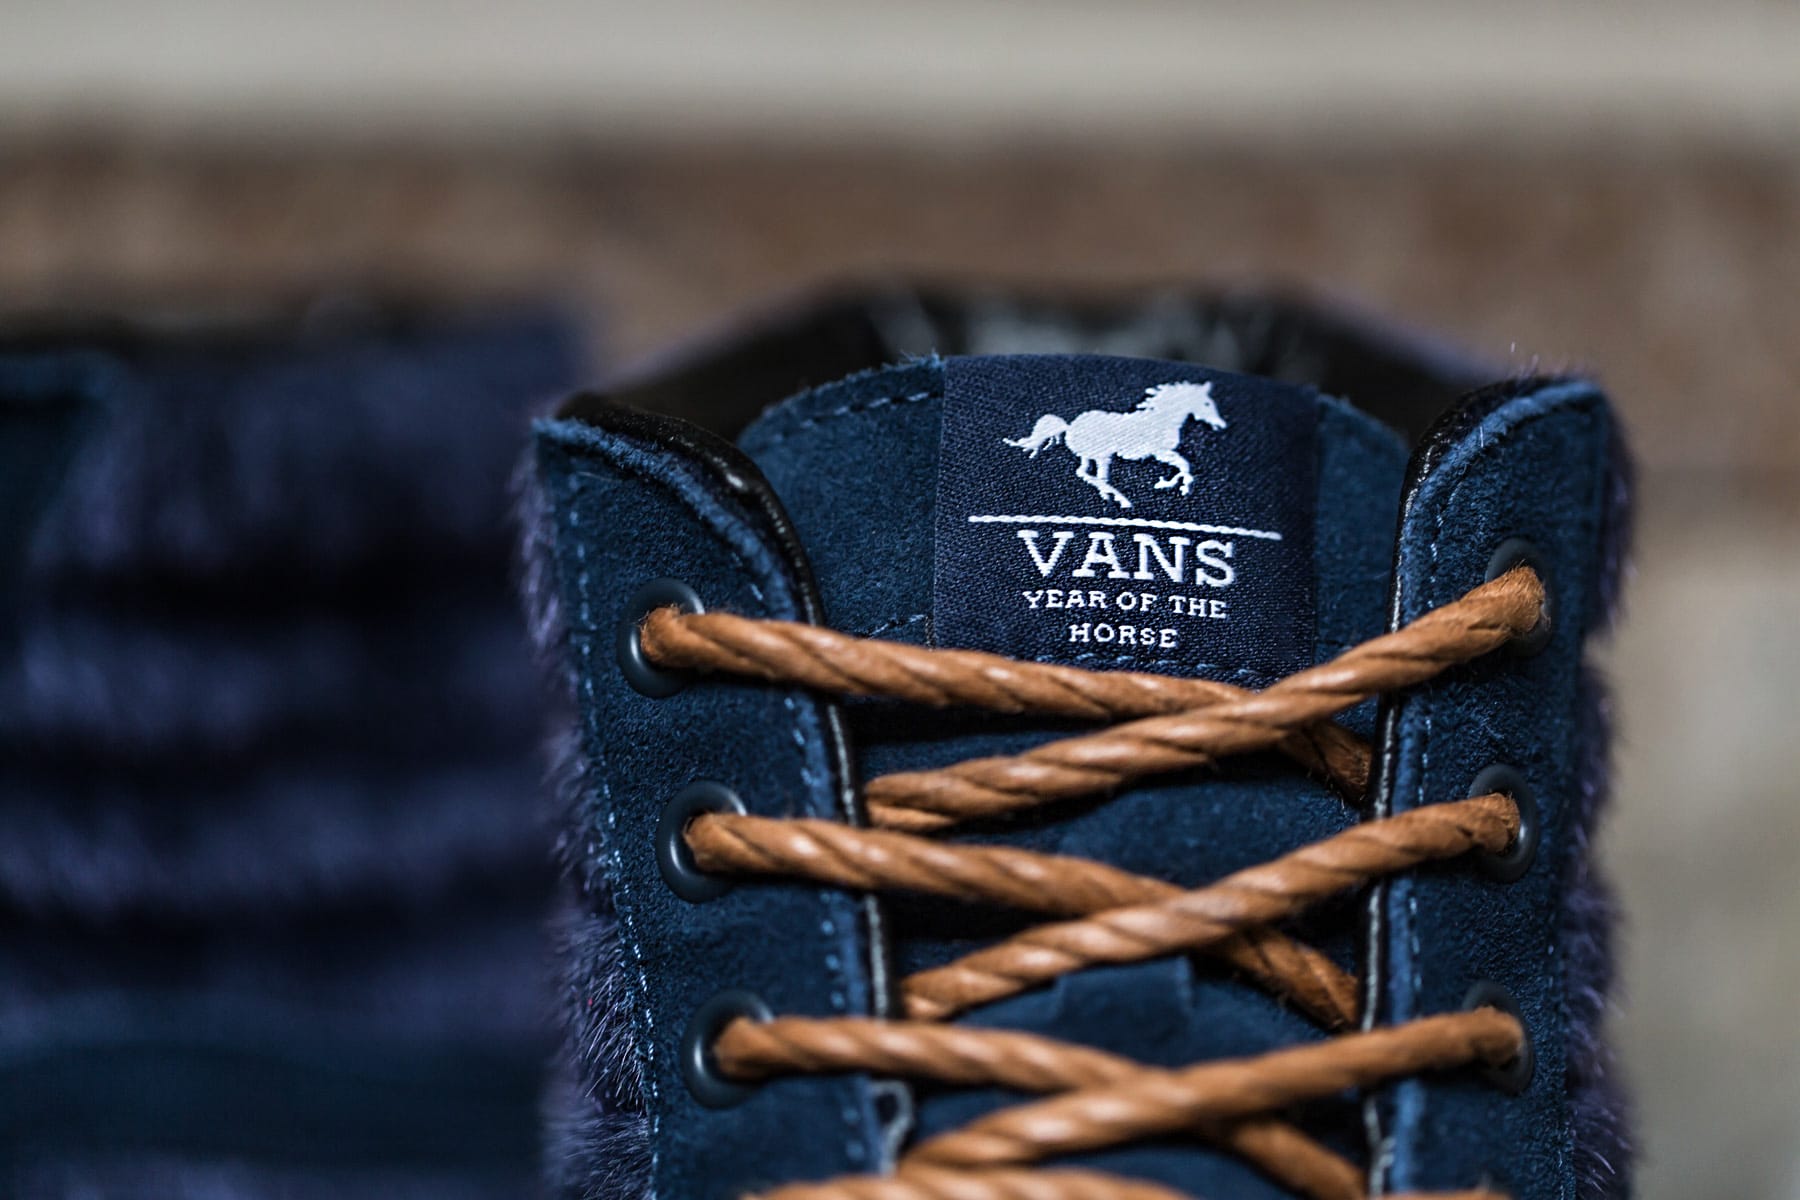 vans sk8 hi reissue 2014 year of the horse pack